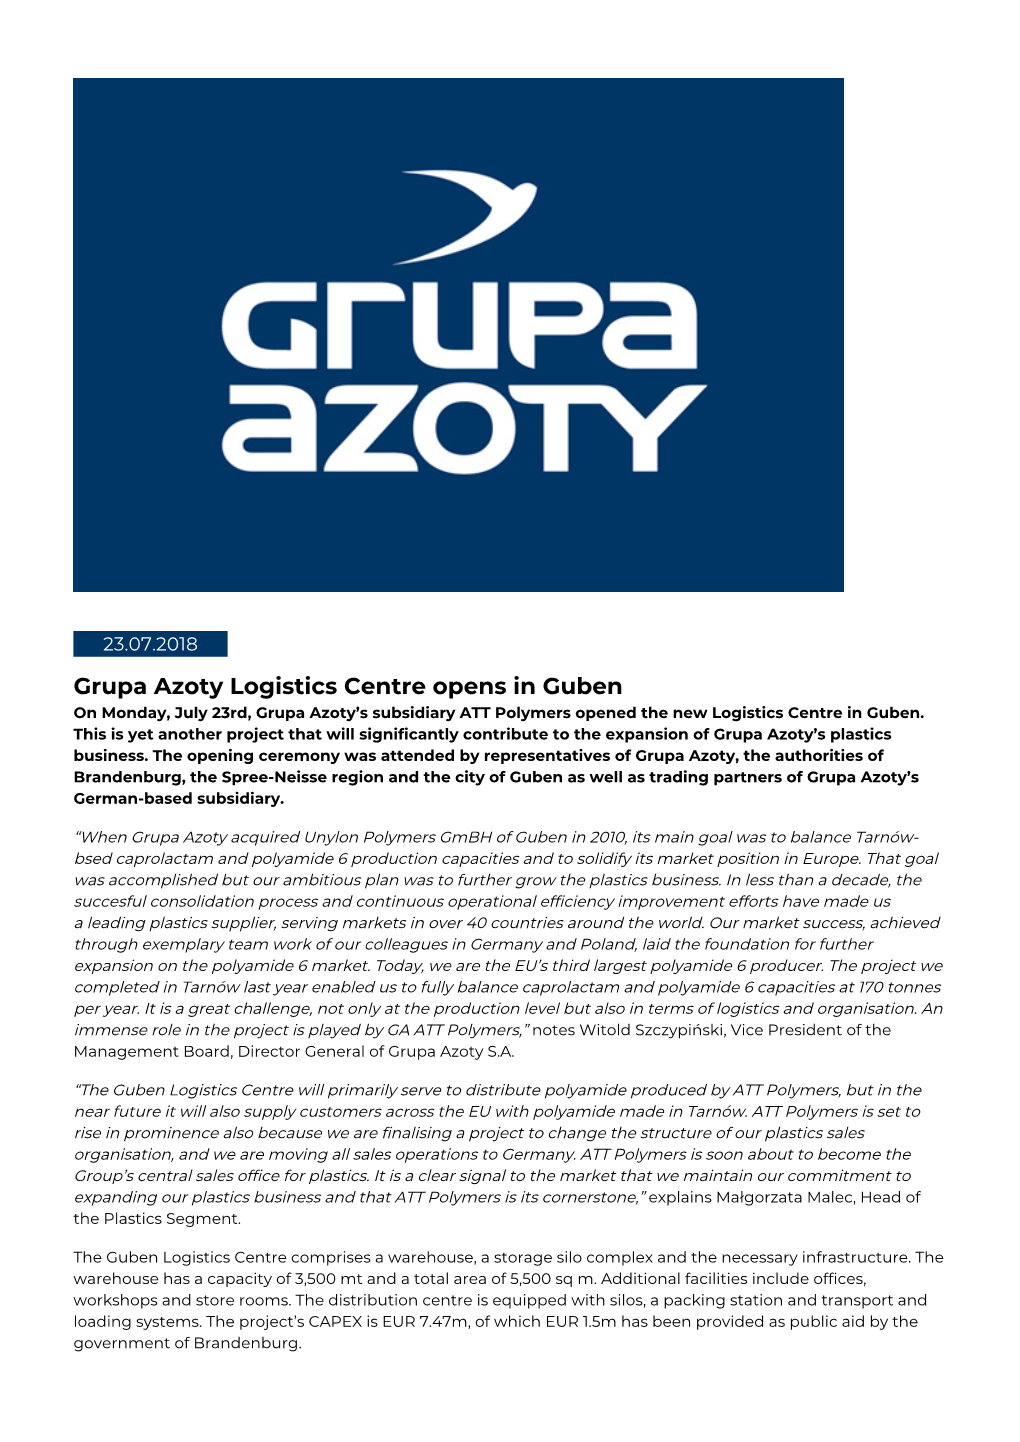 Grupa Azoty Logistics Centre Opens in Guben on Monday, July 23Rd, Grupa Azoty’S Subsidiary ATT Polymers Opened the New Logistics Centre in Guben